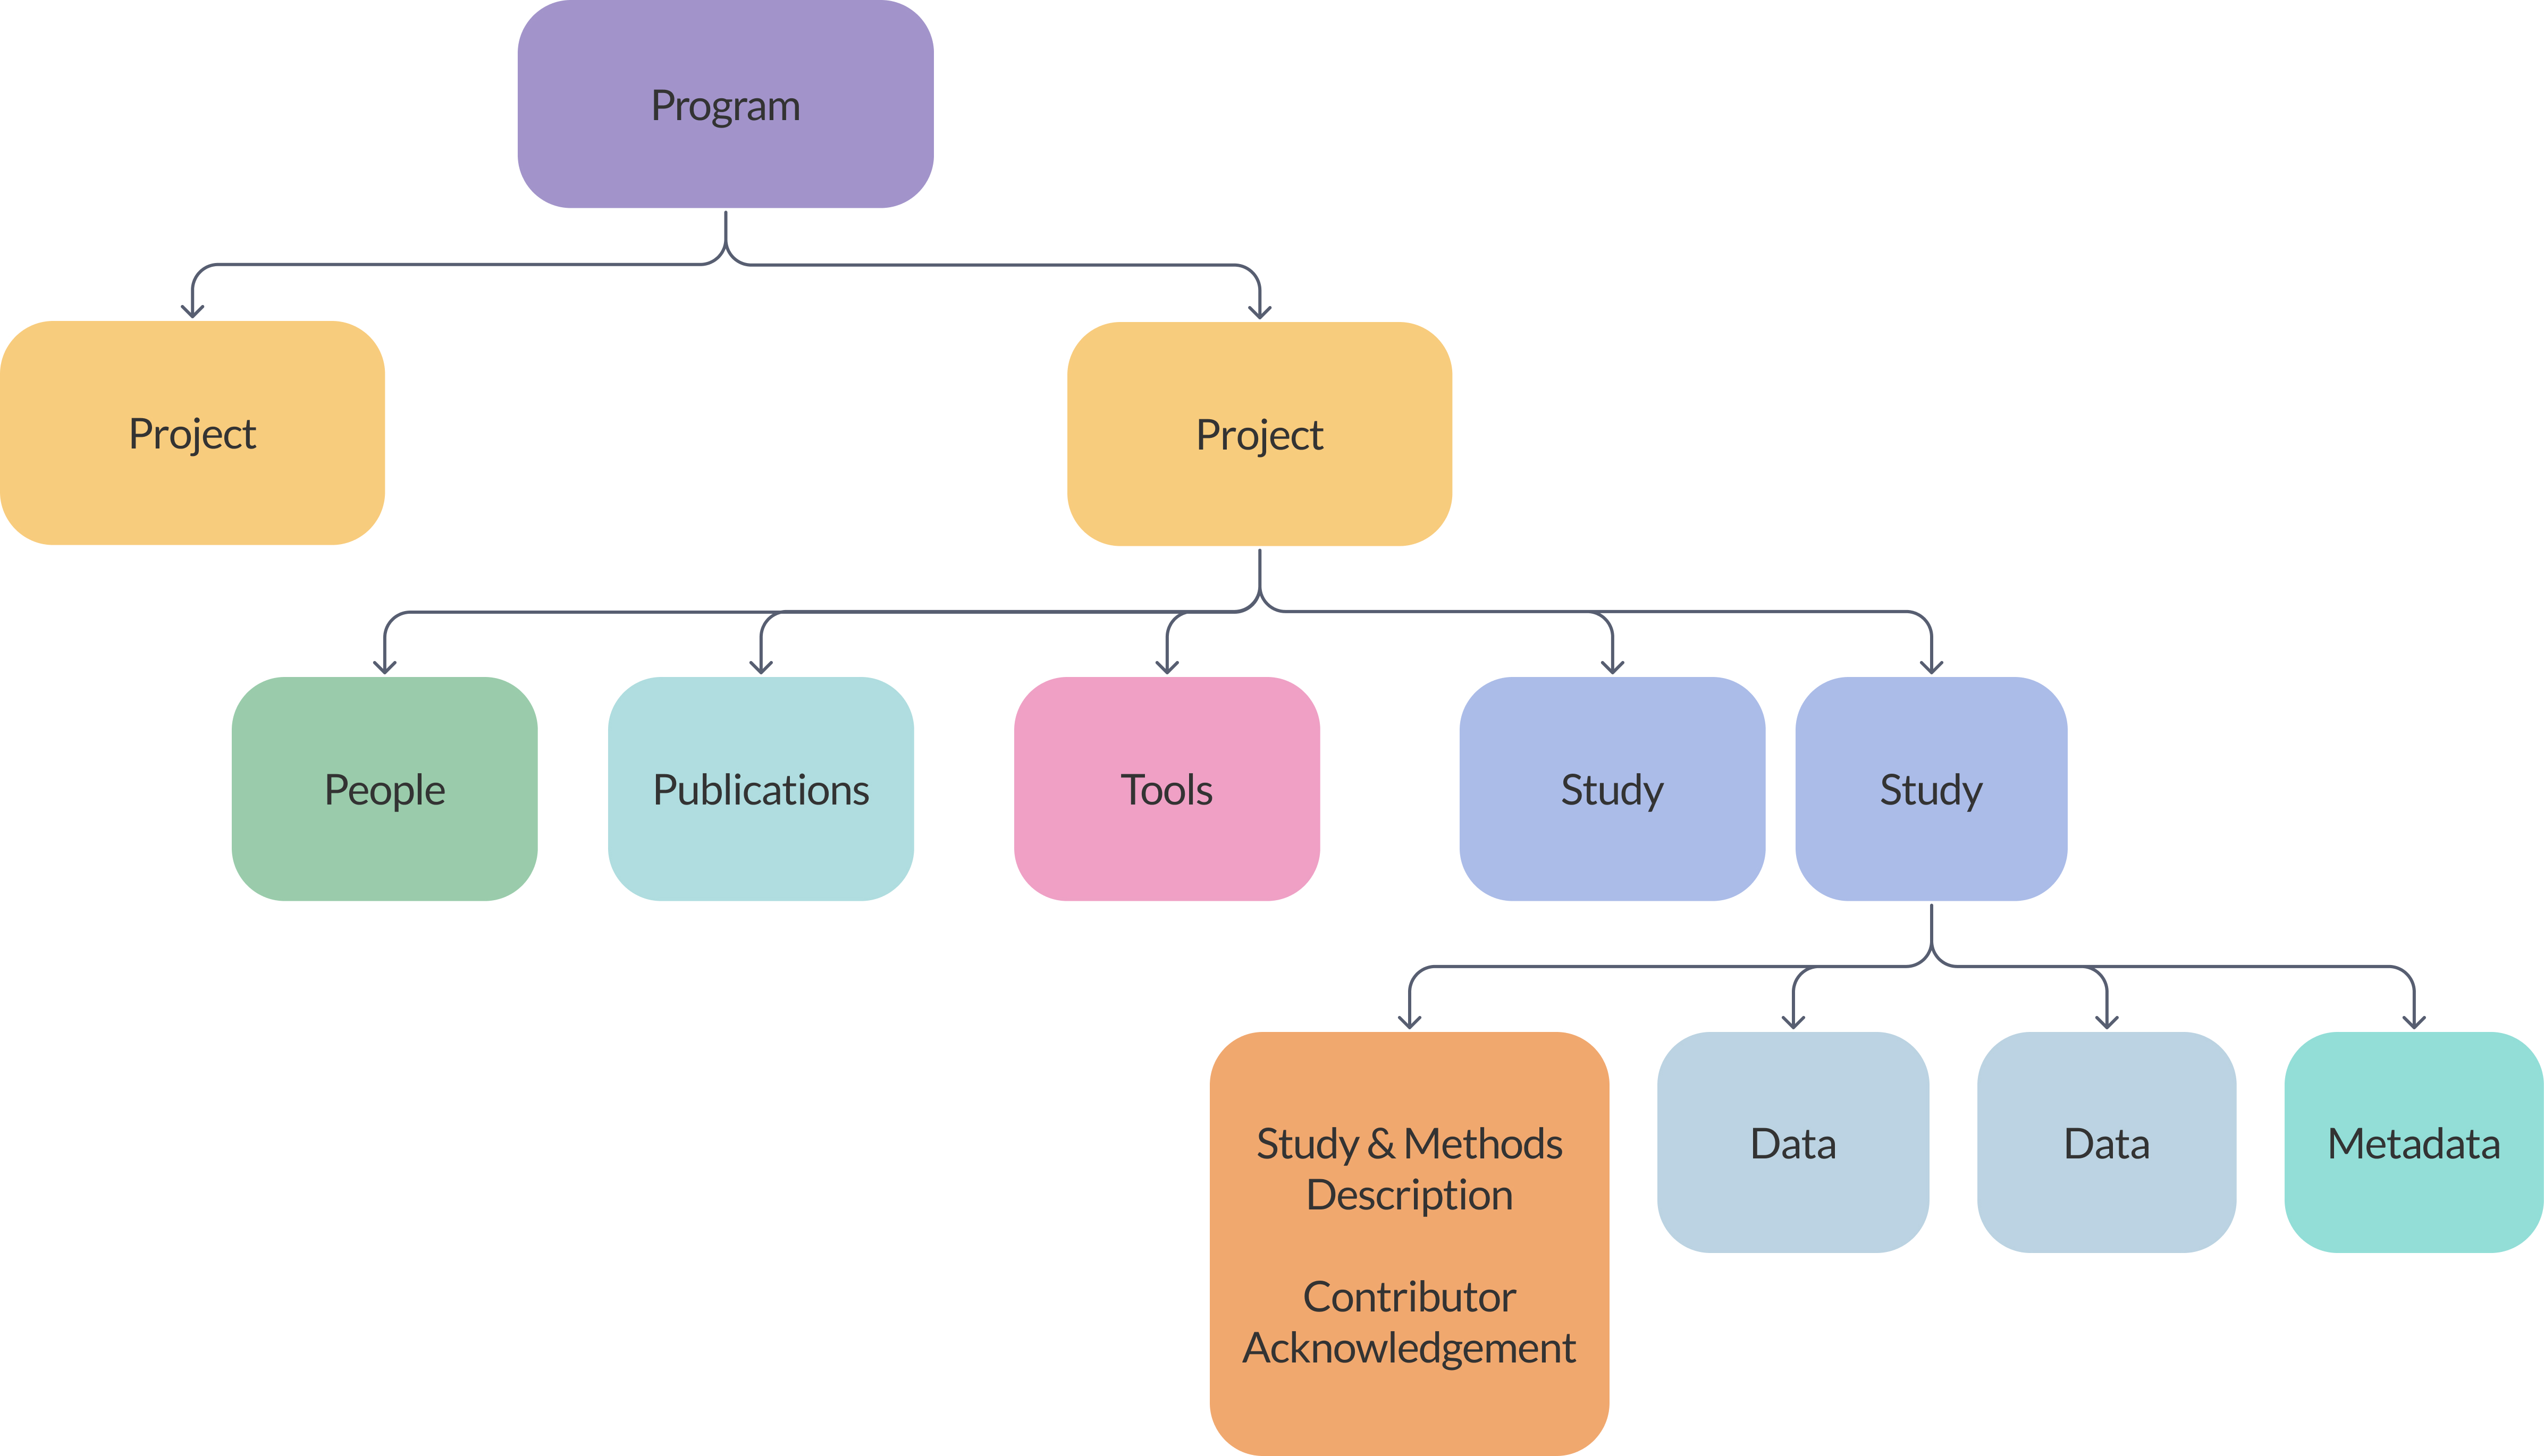 Program_Project_Study_(Data, Structured Metadata, Unstructured Metadata, Acknowledgement Statement for Data Reuse)